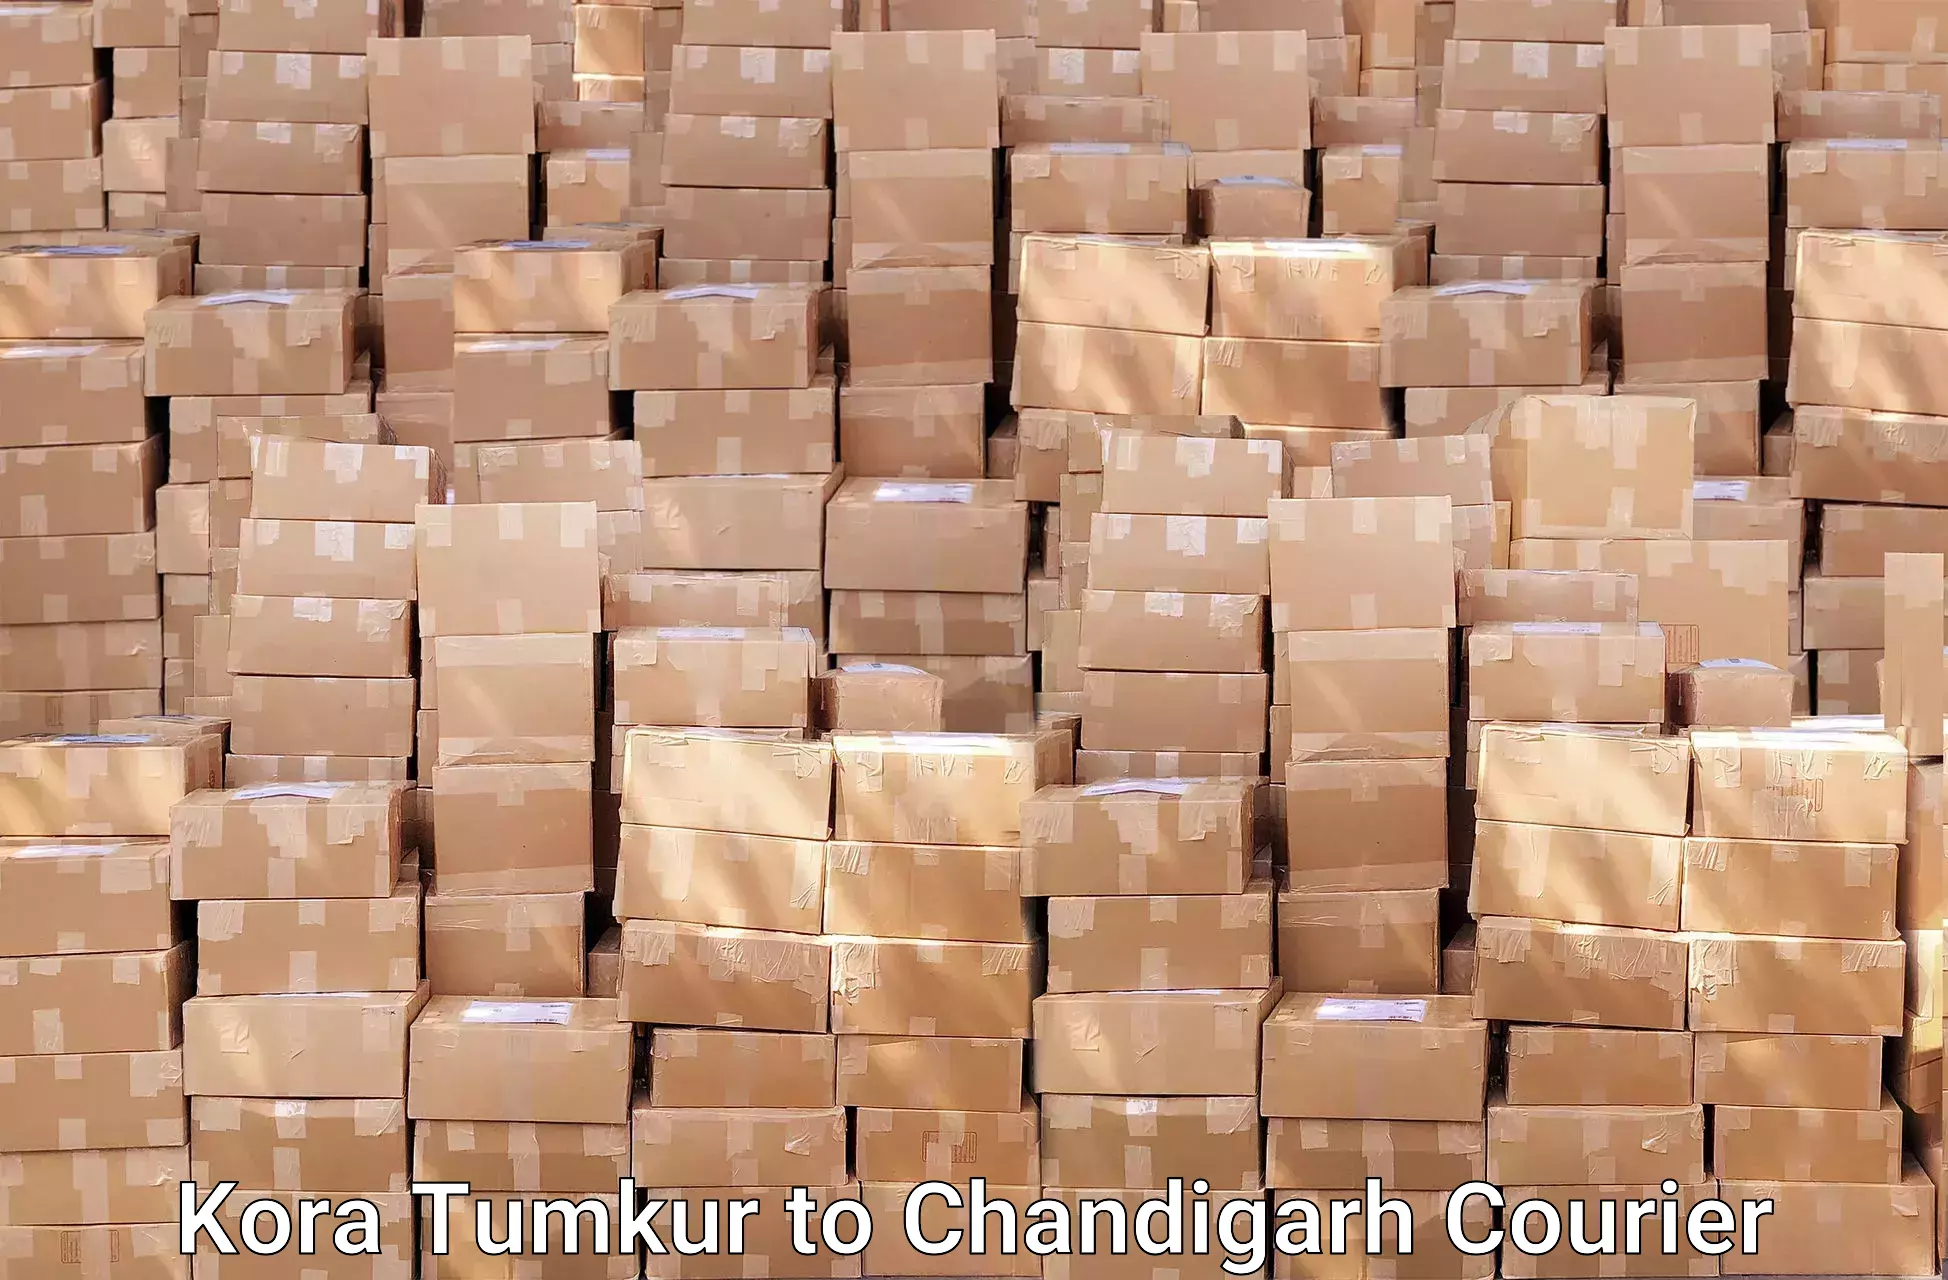 Professional moving assistance Kora Tumkur to Chandigarh